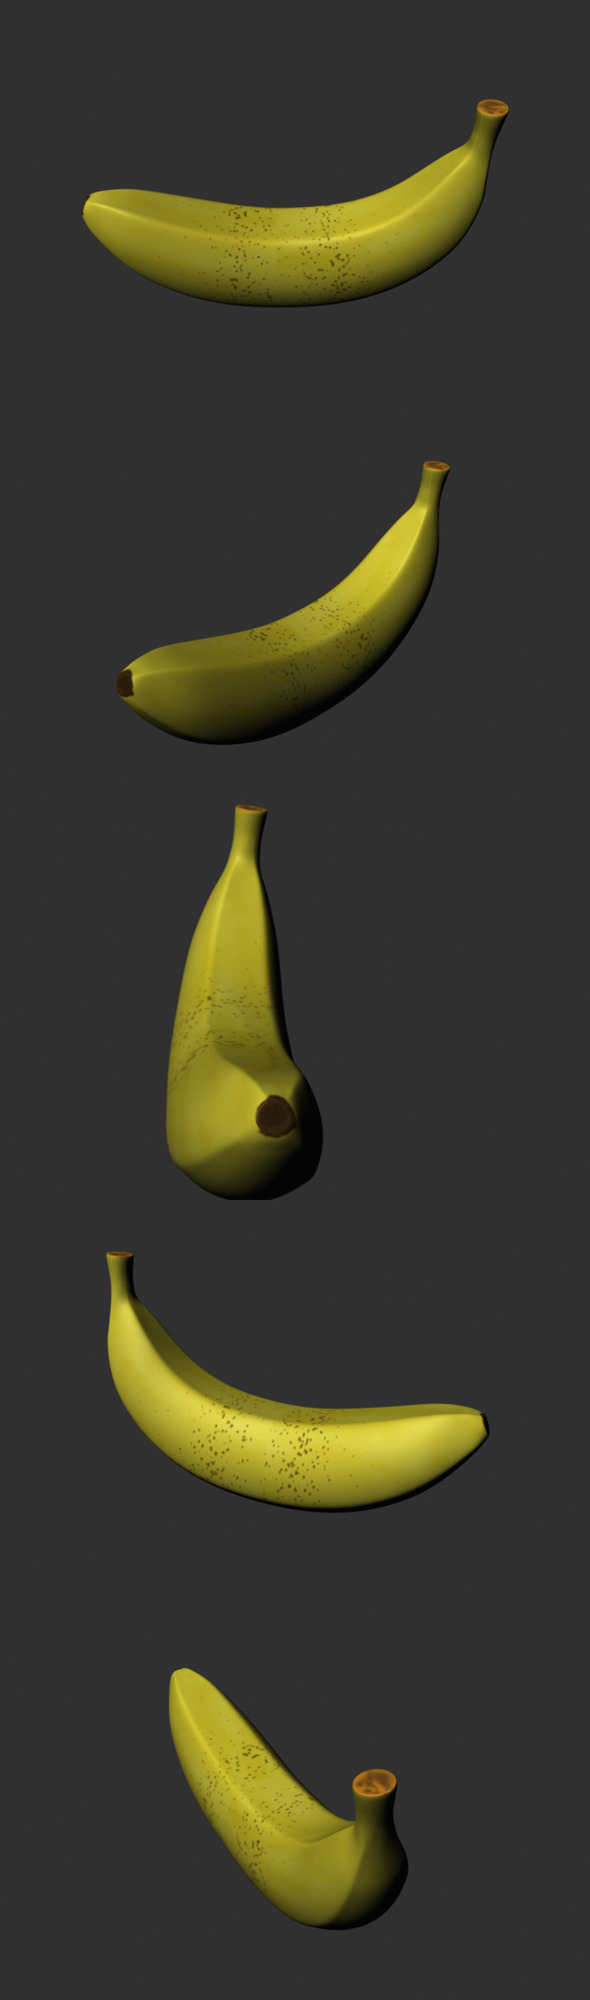 Banana Model - 3Docean 6785141